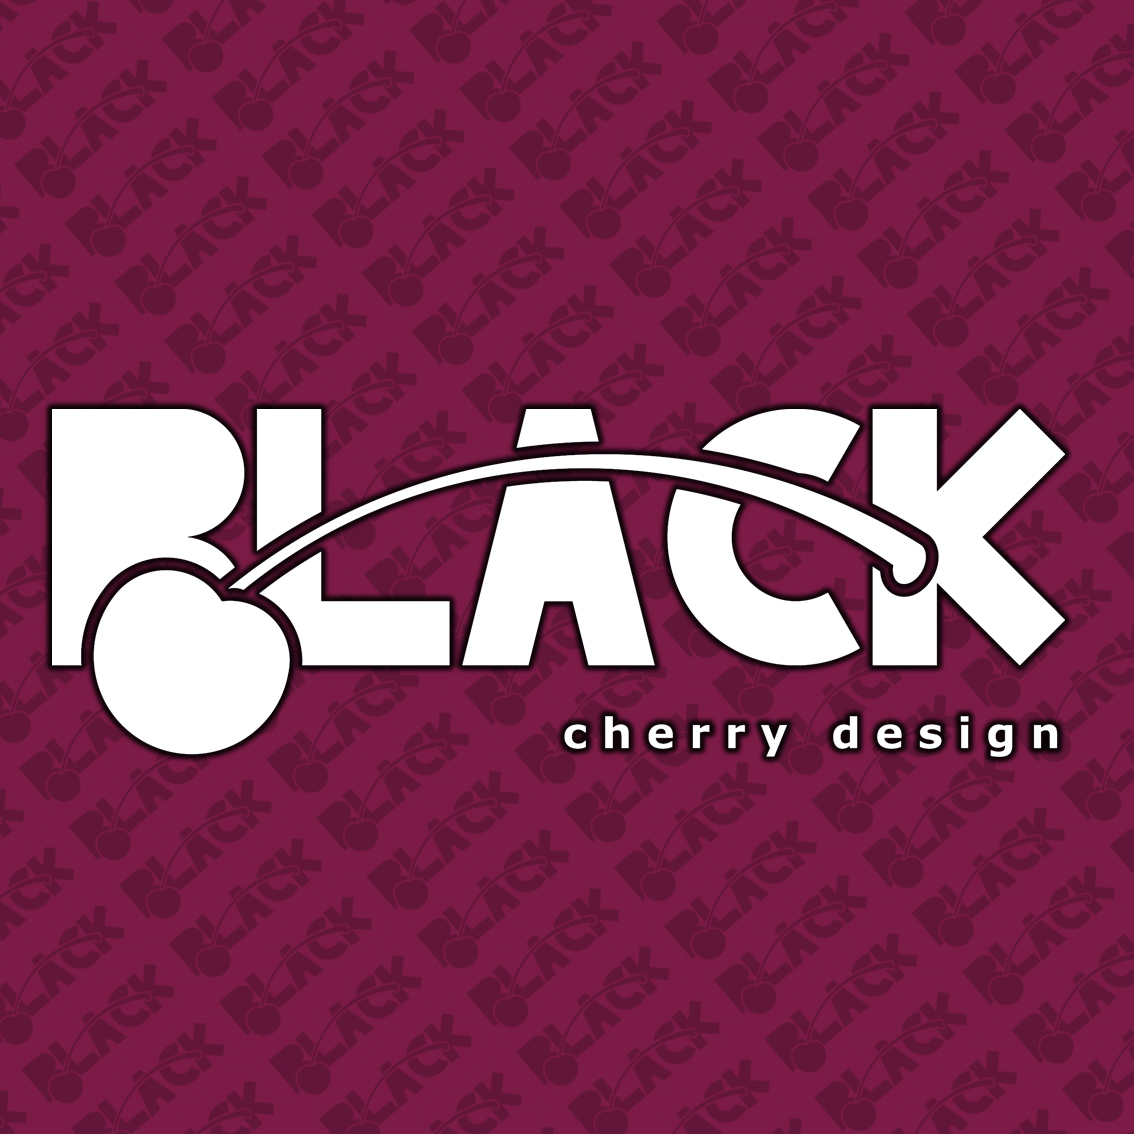 Black Cherry Design